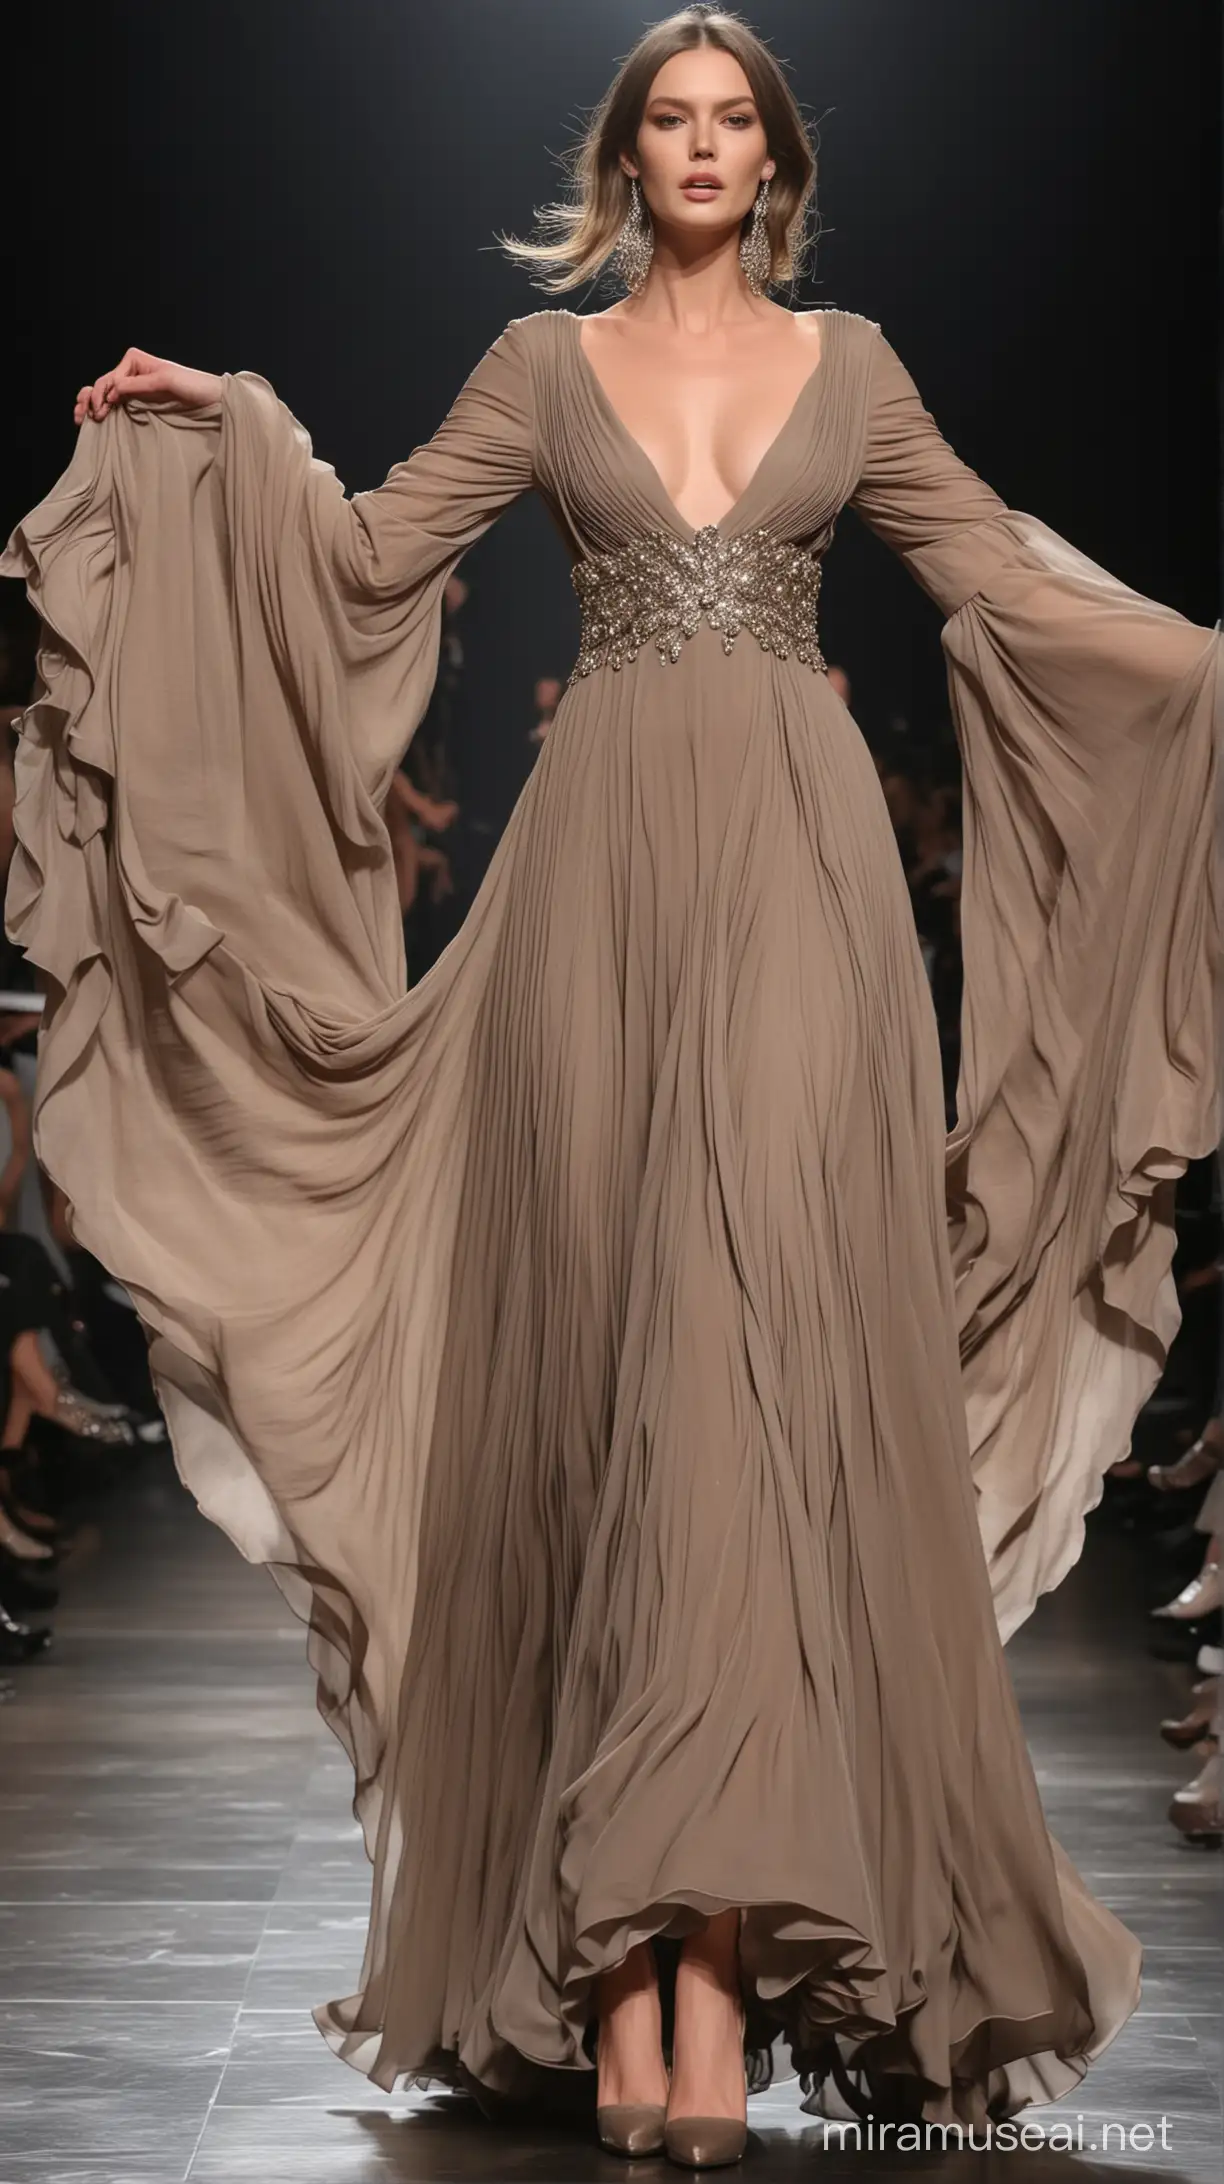 Glamorous Supermodel in Dramatic Bell Sleeves Foil Dress